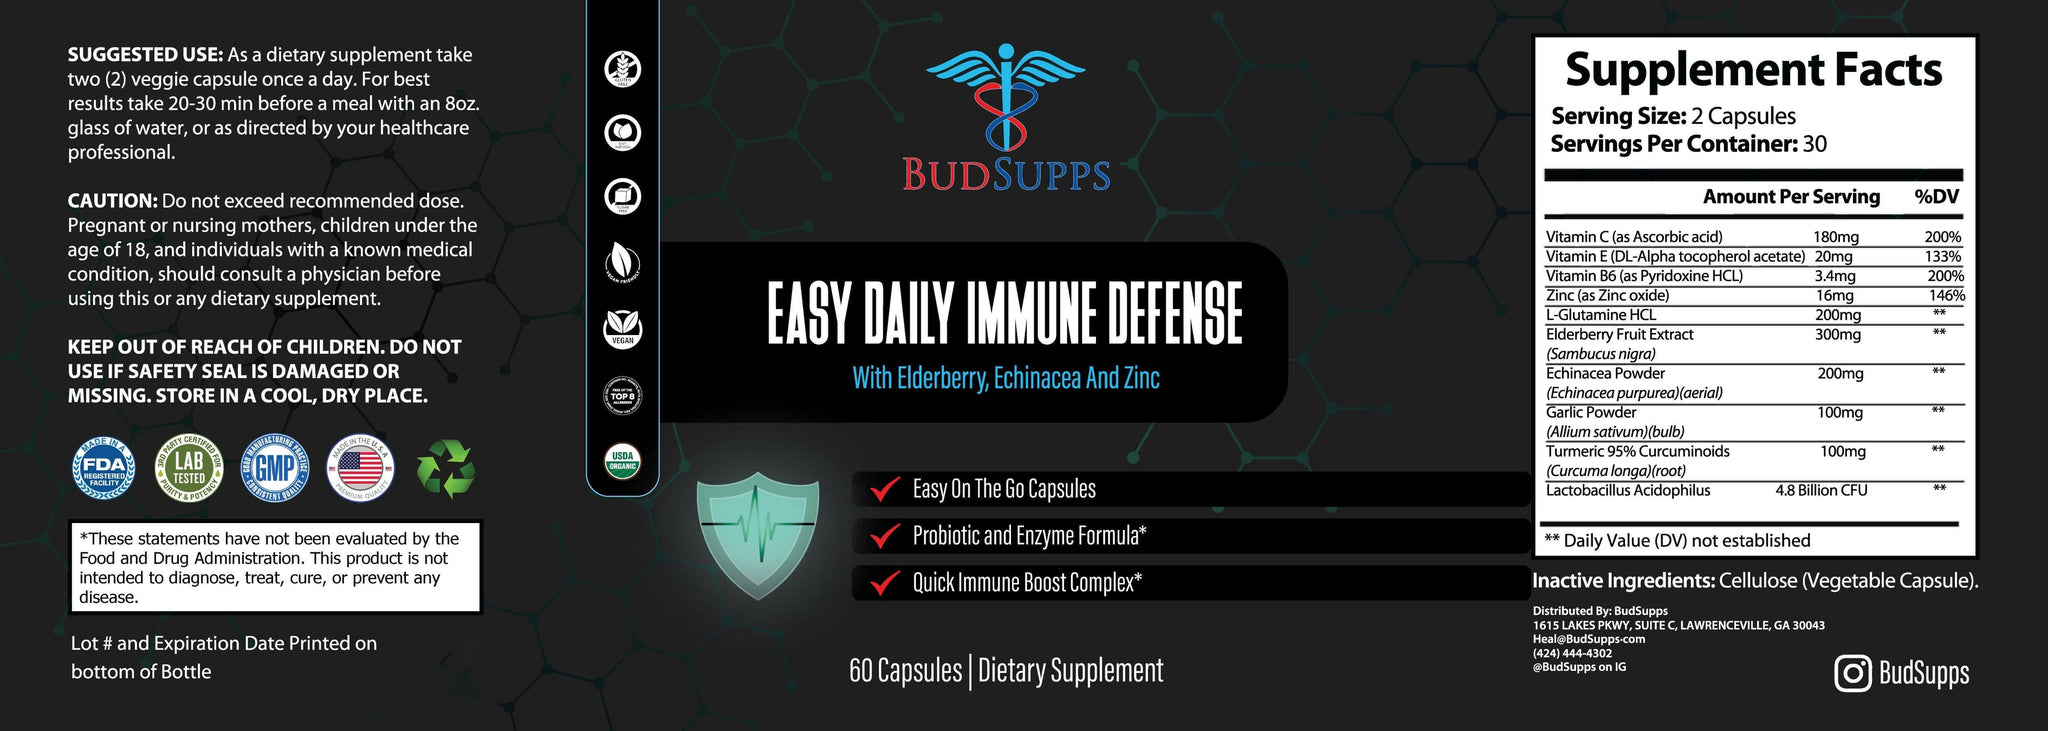 Easy Daily Immune Defense With Elderberry, Vitamin C and Zinc (Capsules)